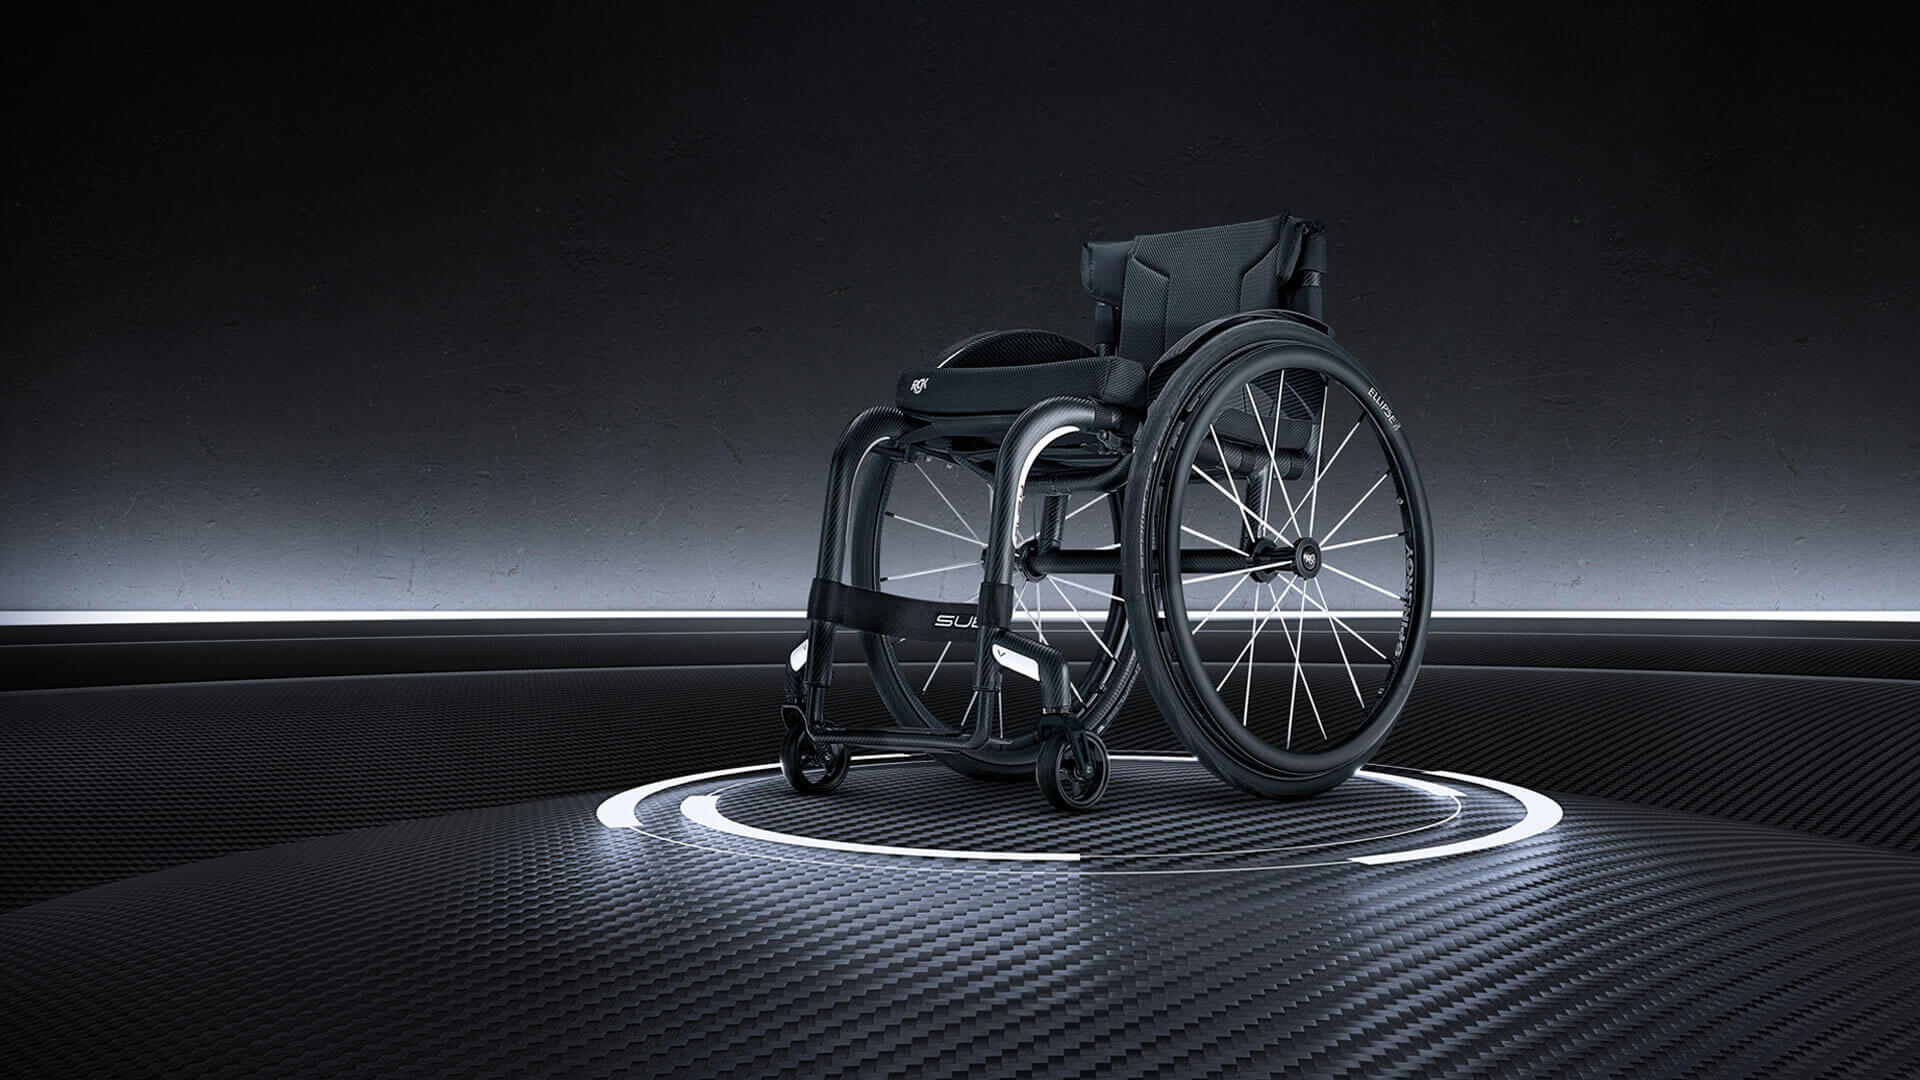 RGK Veypr Sub4 wheelchair wins Harding Innovation Award at CSMC in Canada